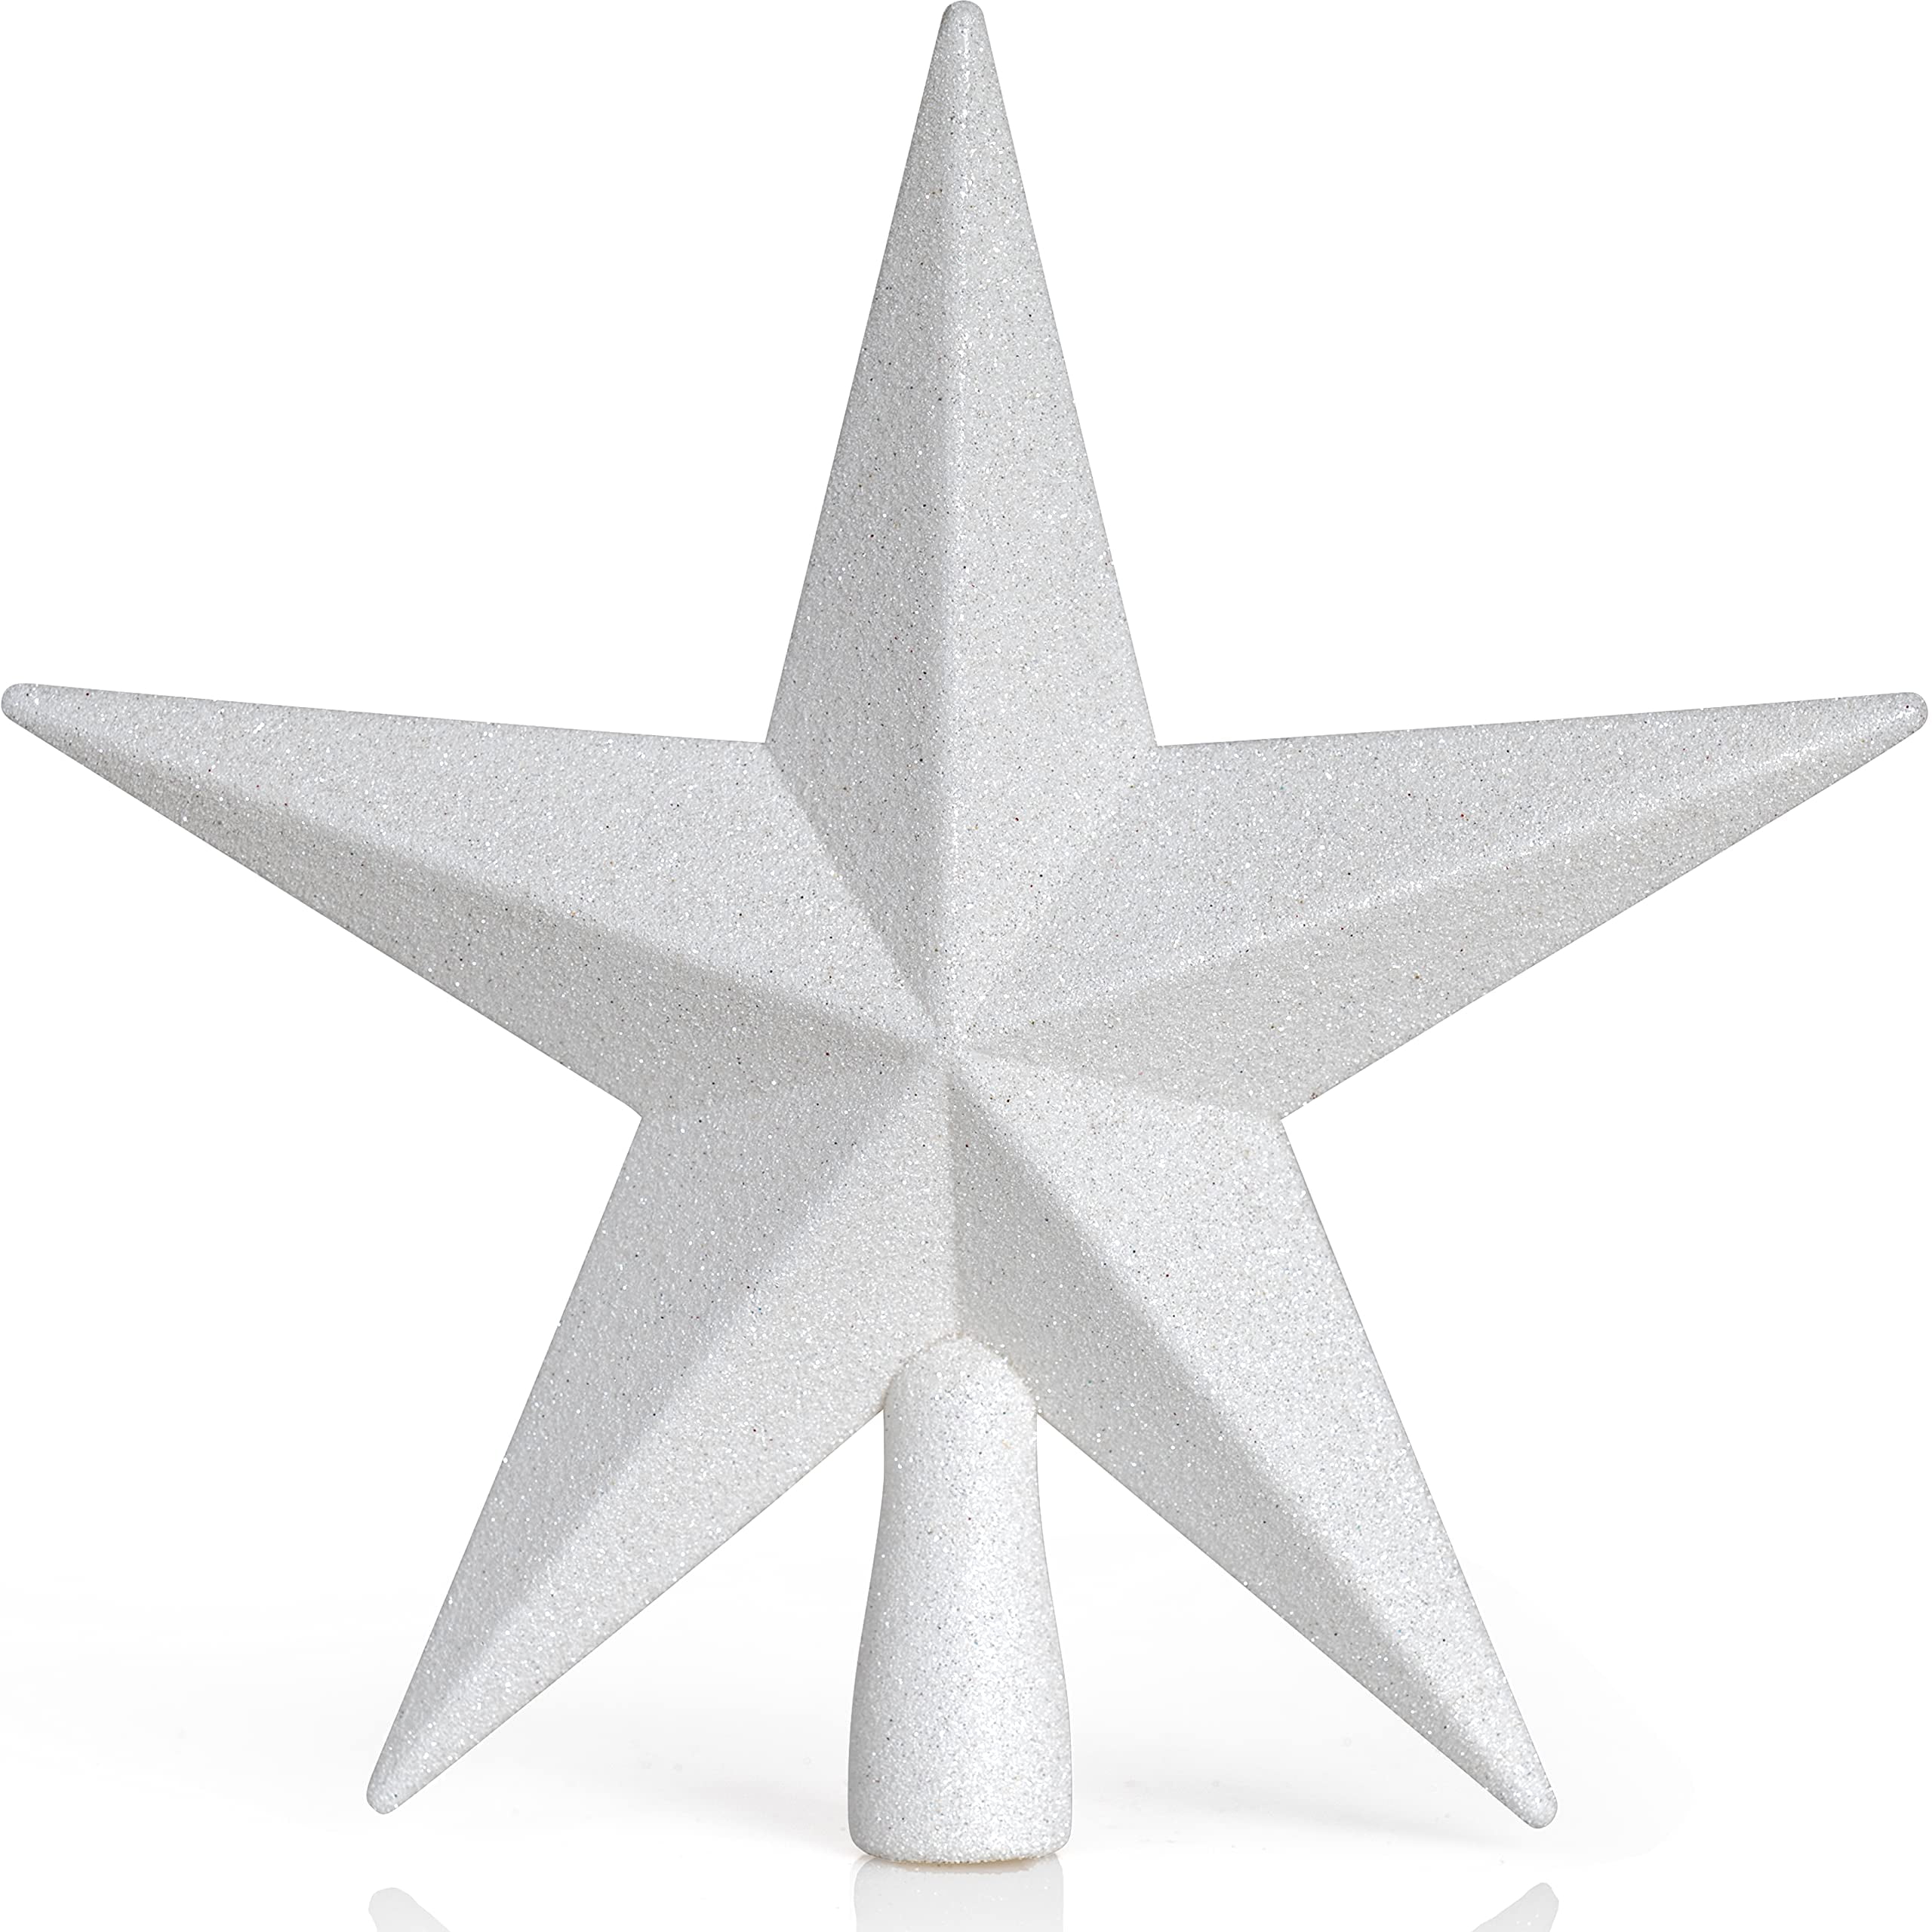 Ornativity Glitter Star Tree Topper - Christmas White Decorative ...